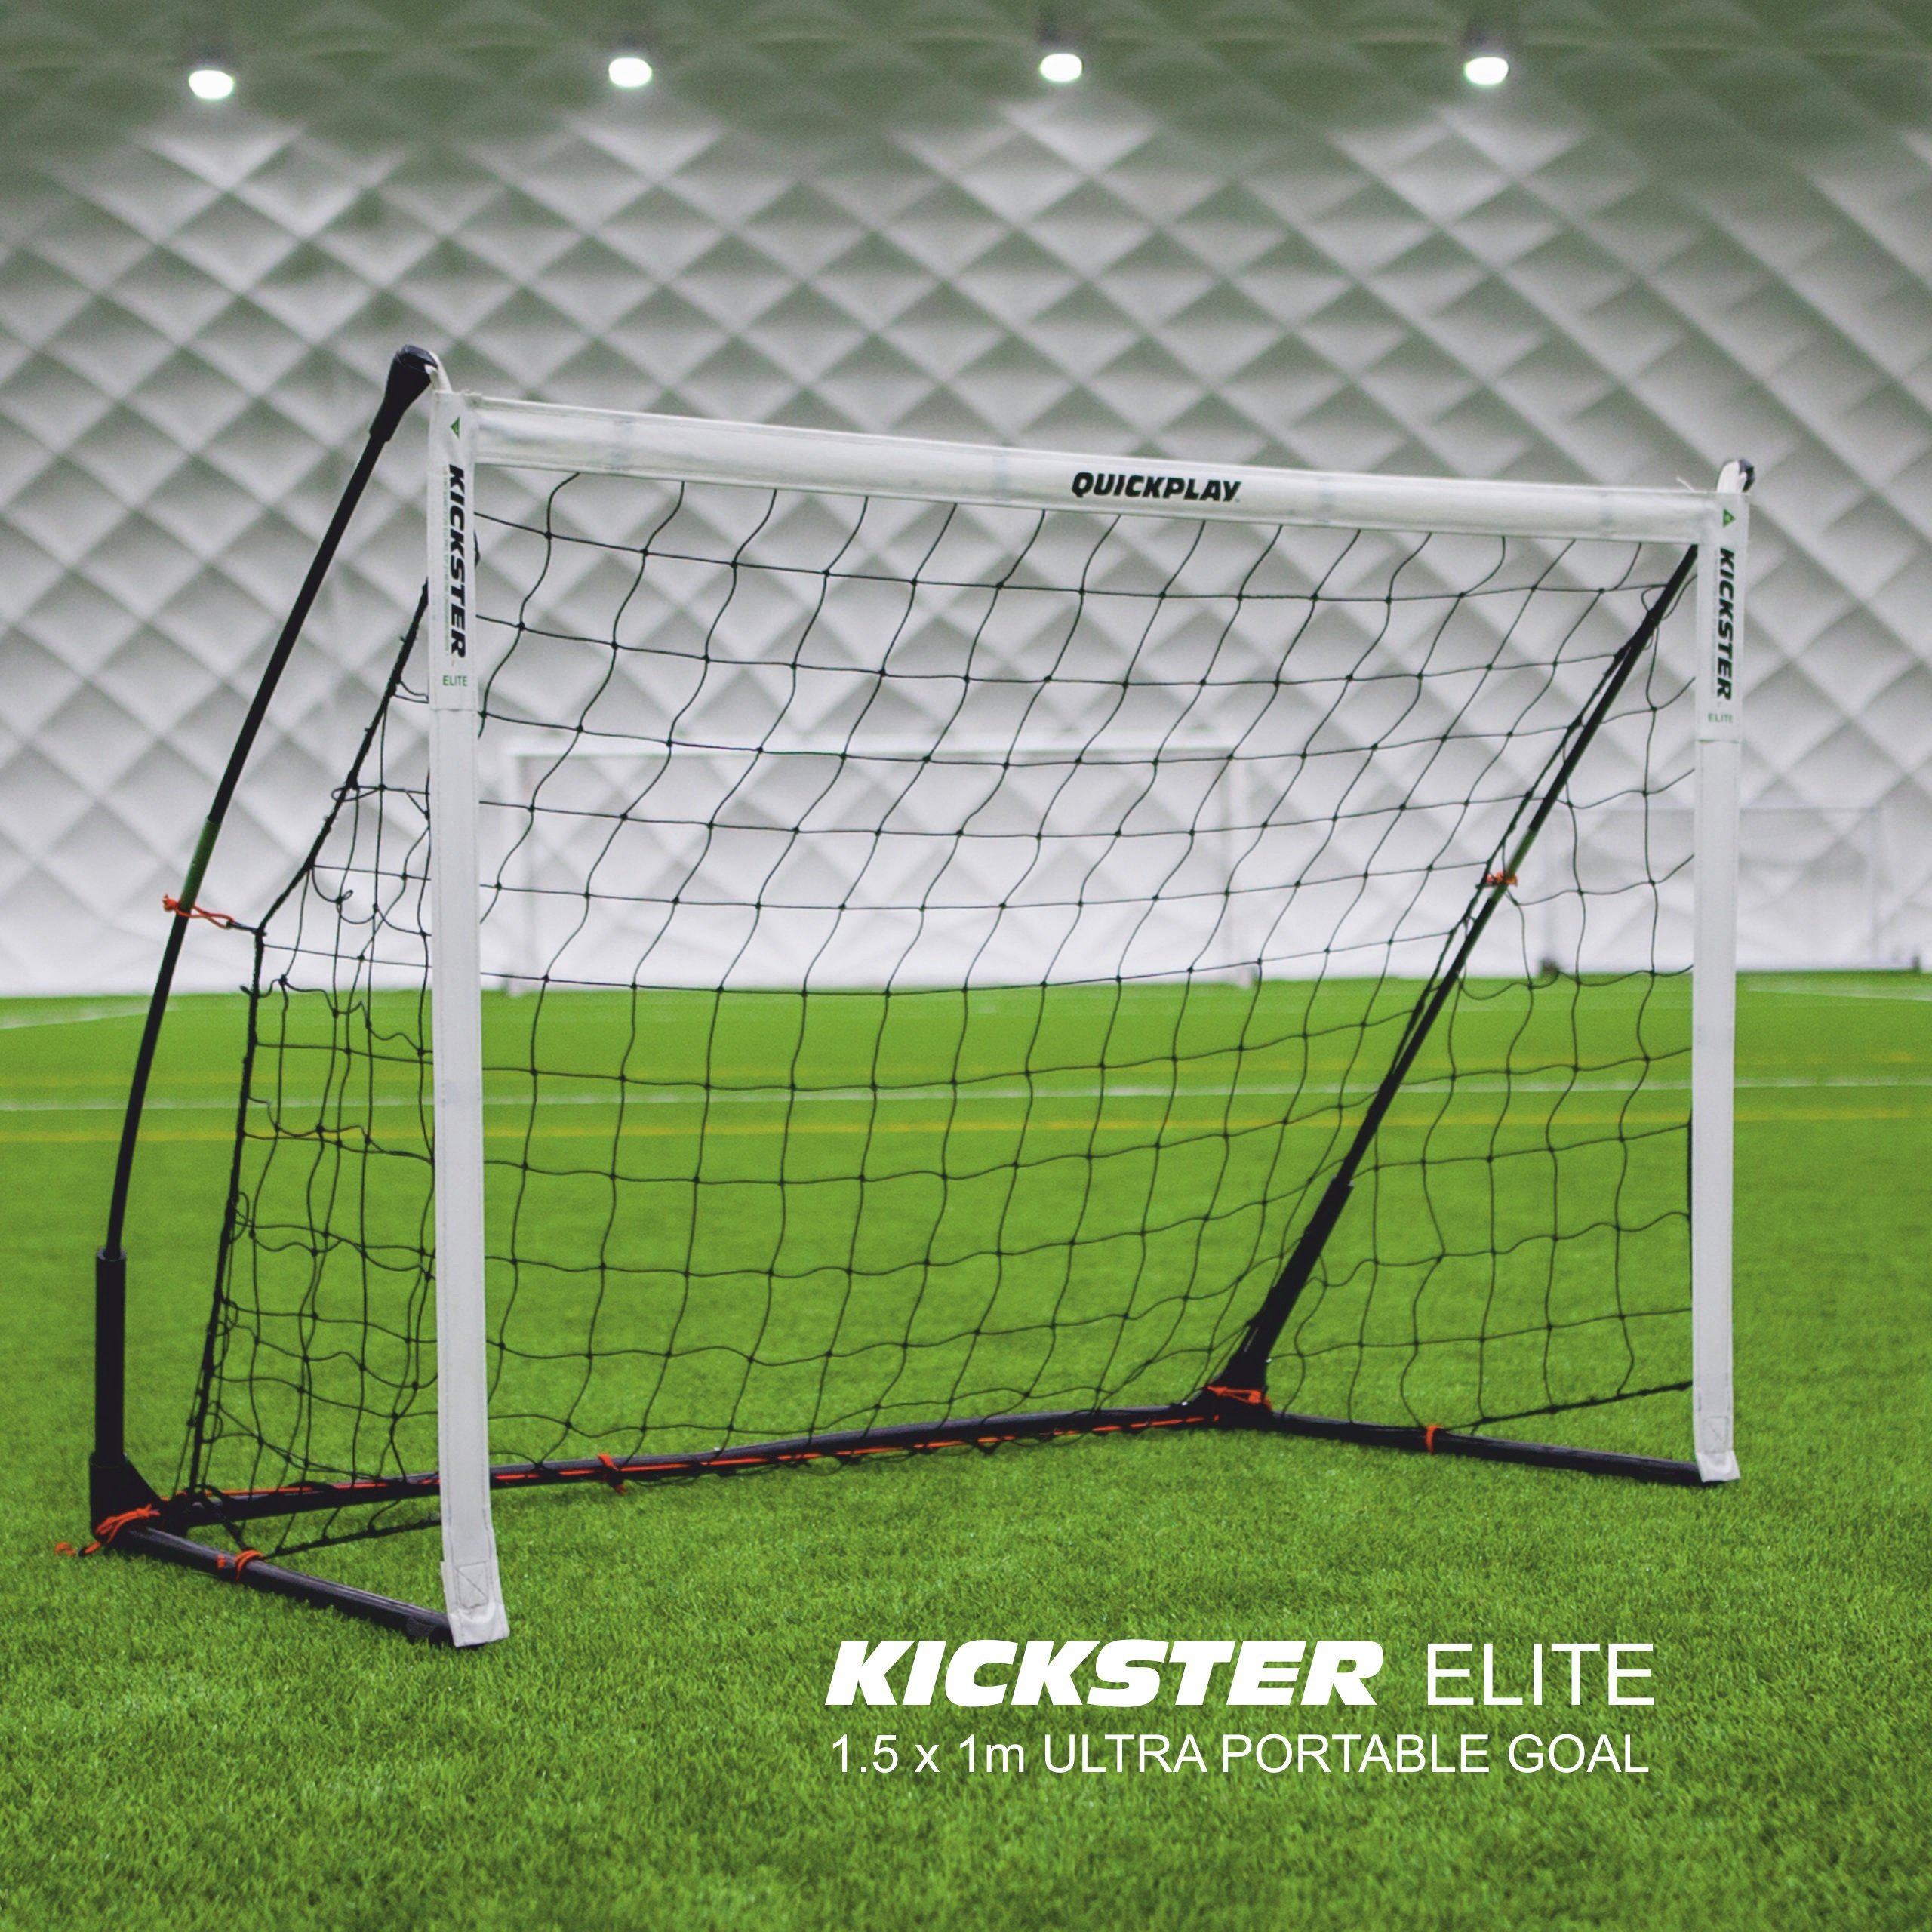 Kickster 1.5 x 1m Elite Target Goal Review